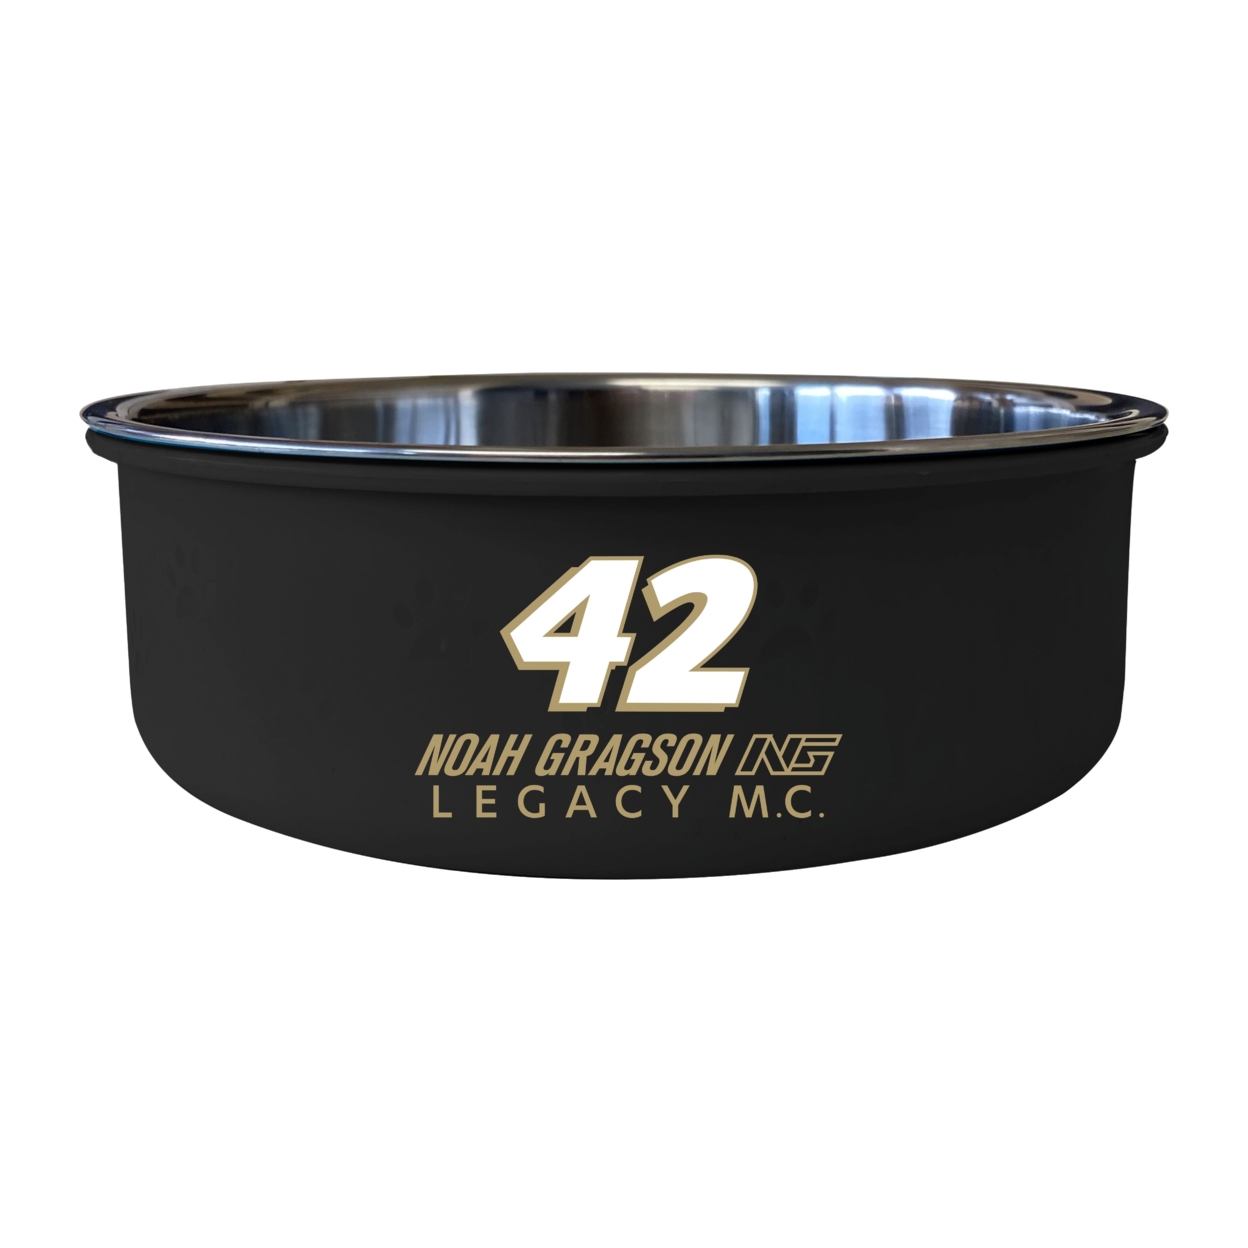 #42 Noah Gragson Officially Licensed 5x2.25 Pet Bowl